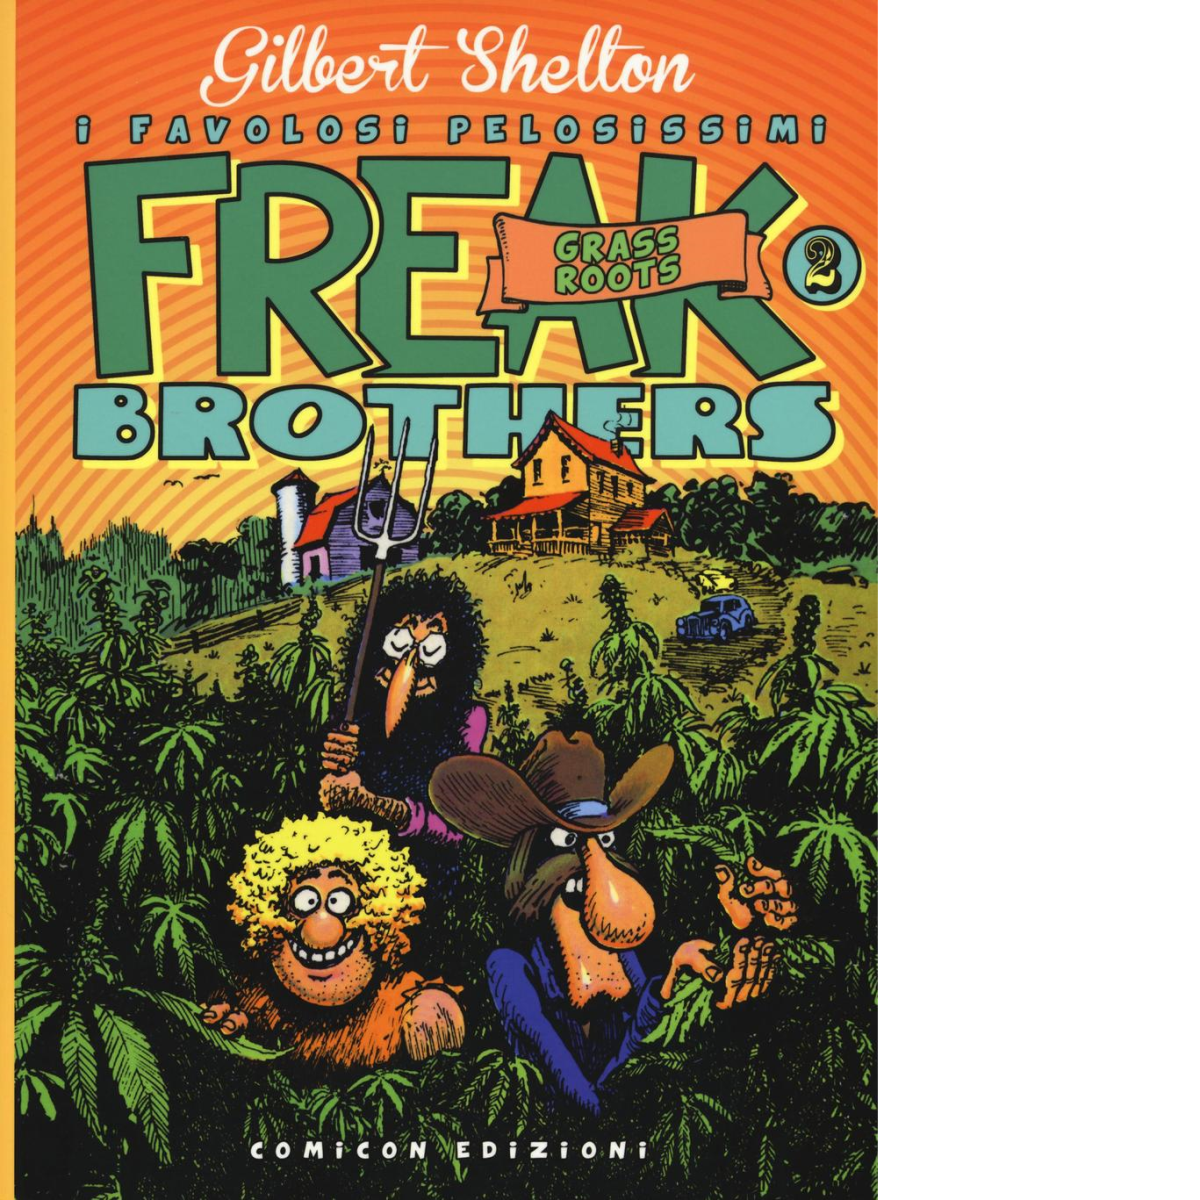 Freak brothers VOL.2 - Gilbert Shelton, Dave Sheridan - Comicon, 2016 libro usato